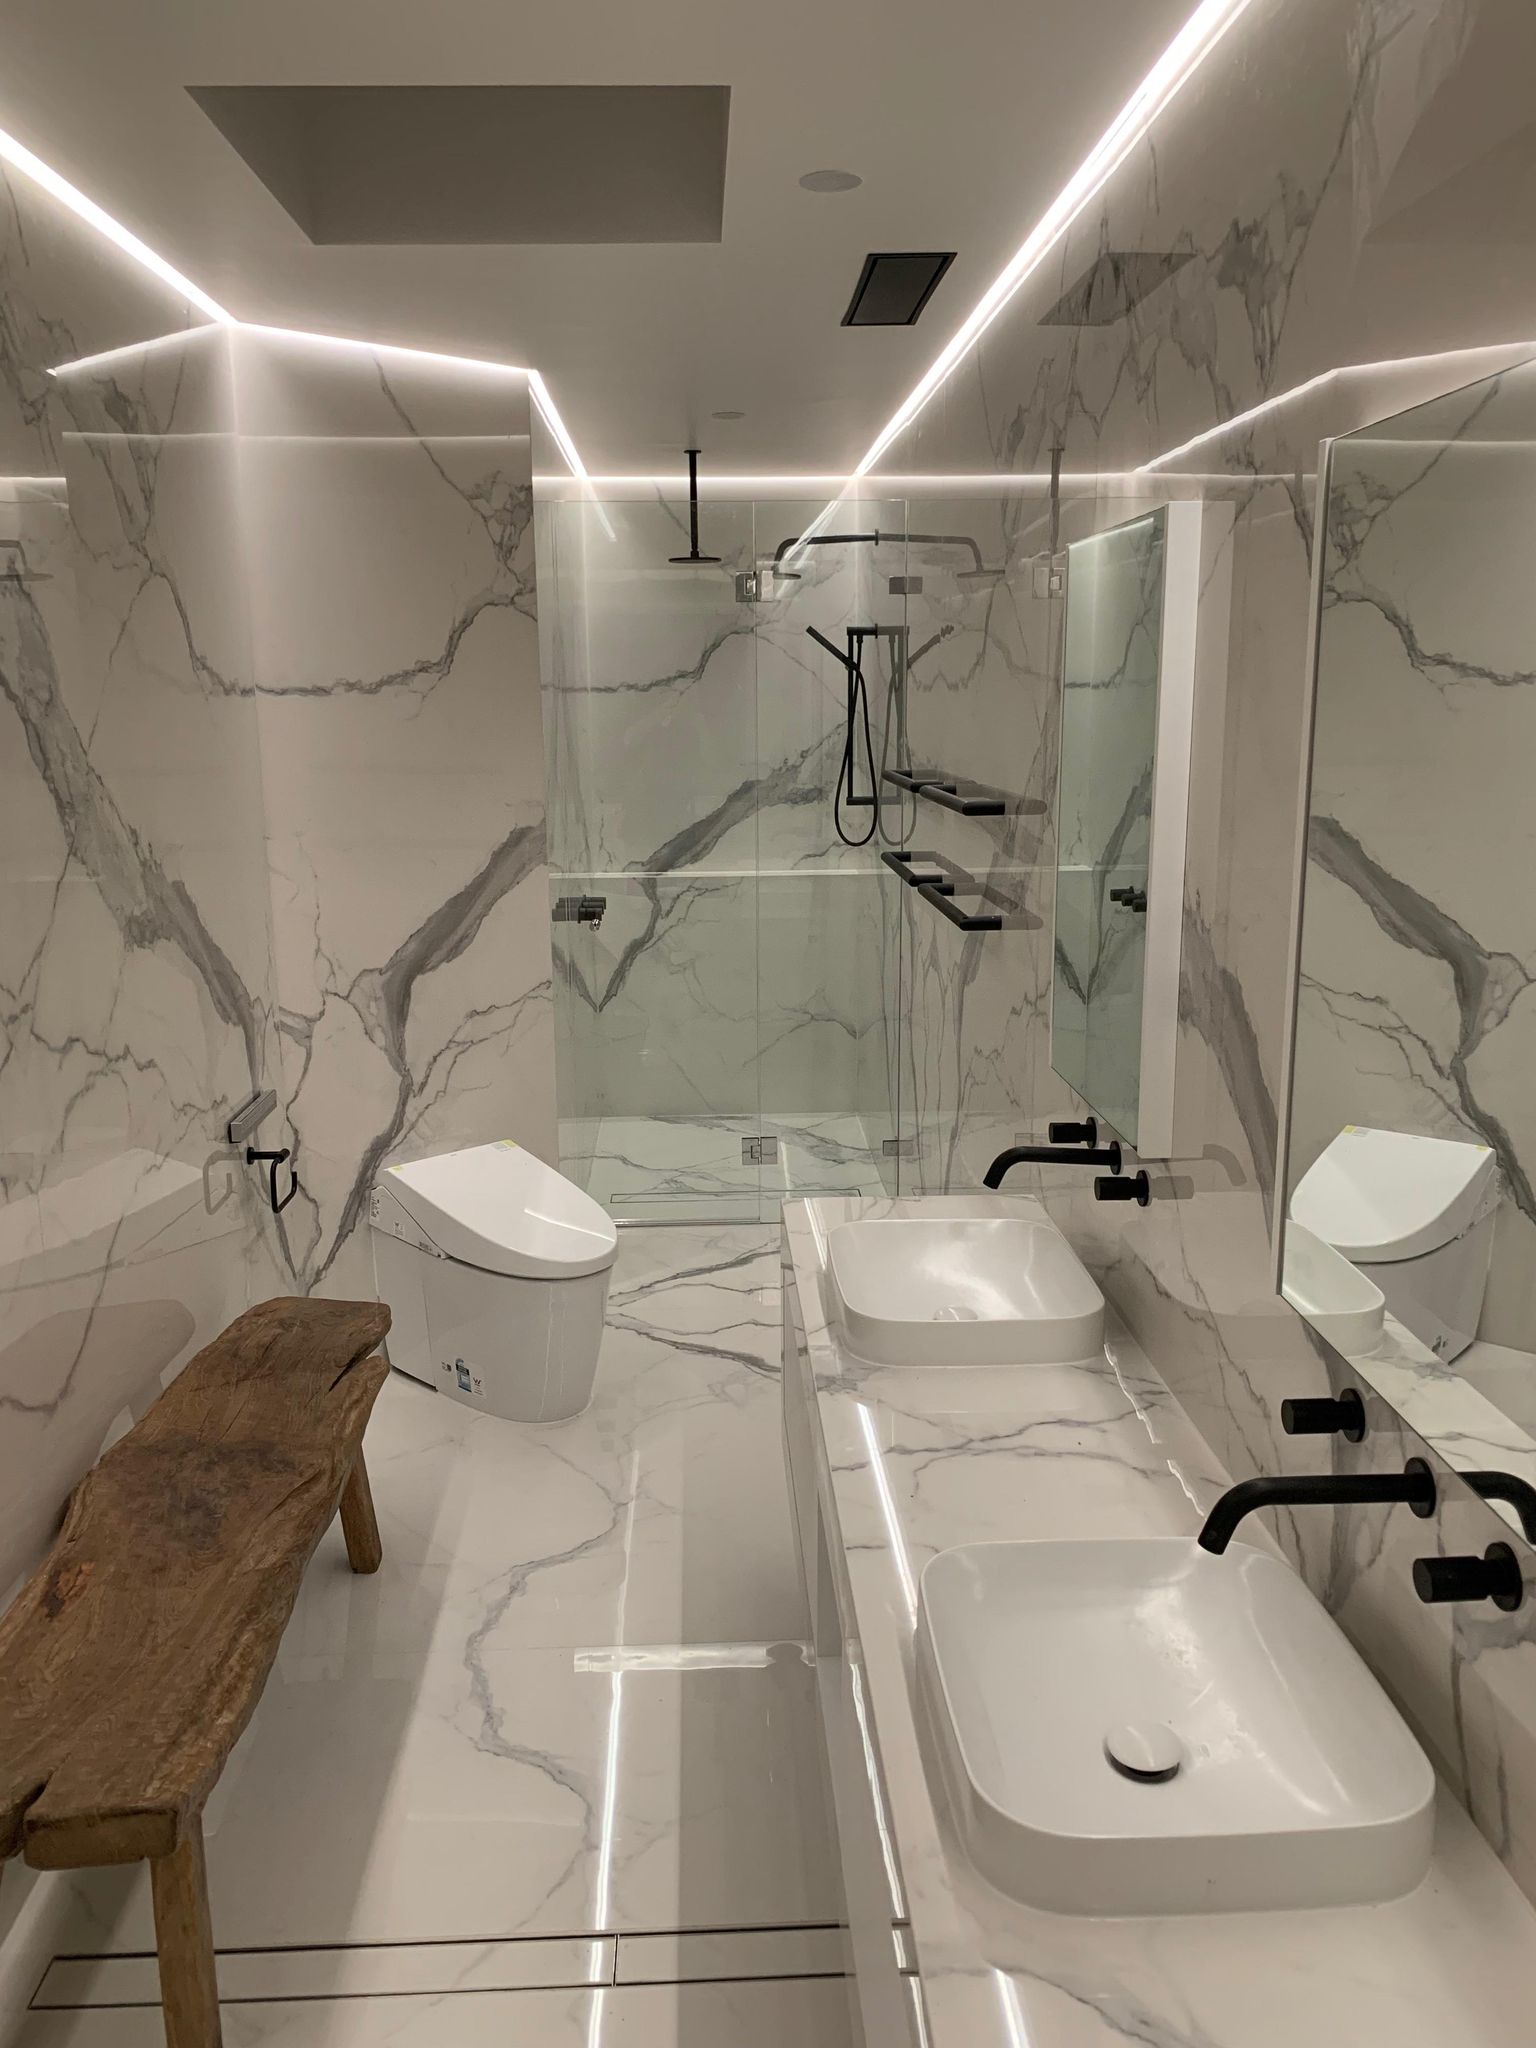 Bathroom Porcelain Installation - Sydney Stonemason - Porcelain Stone